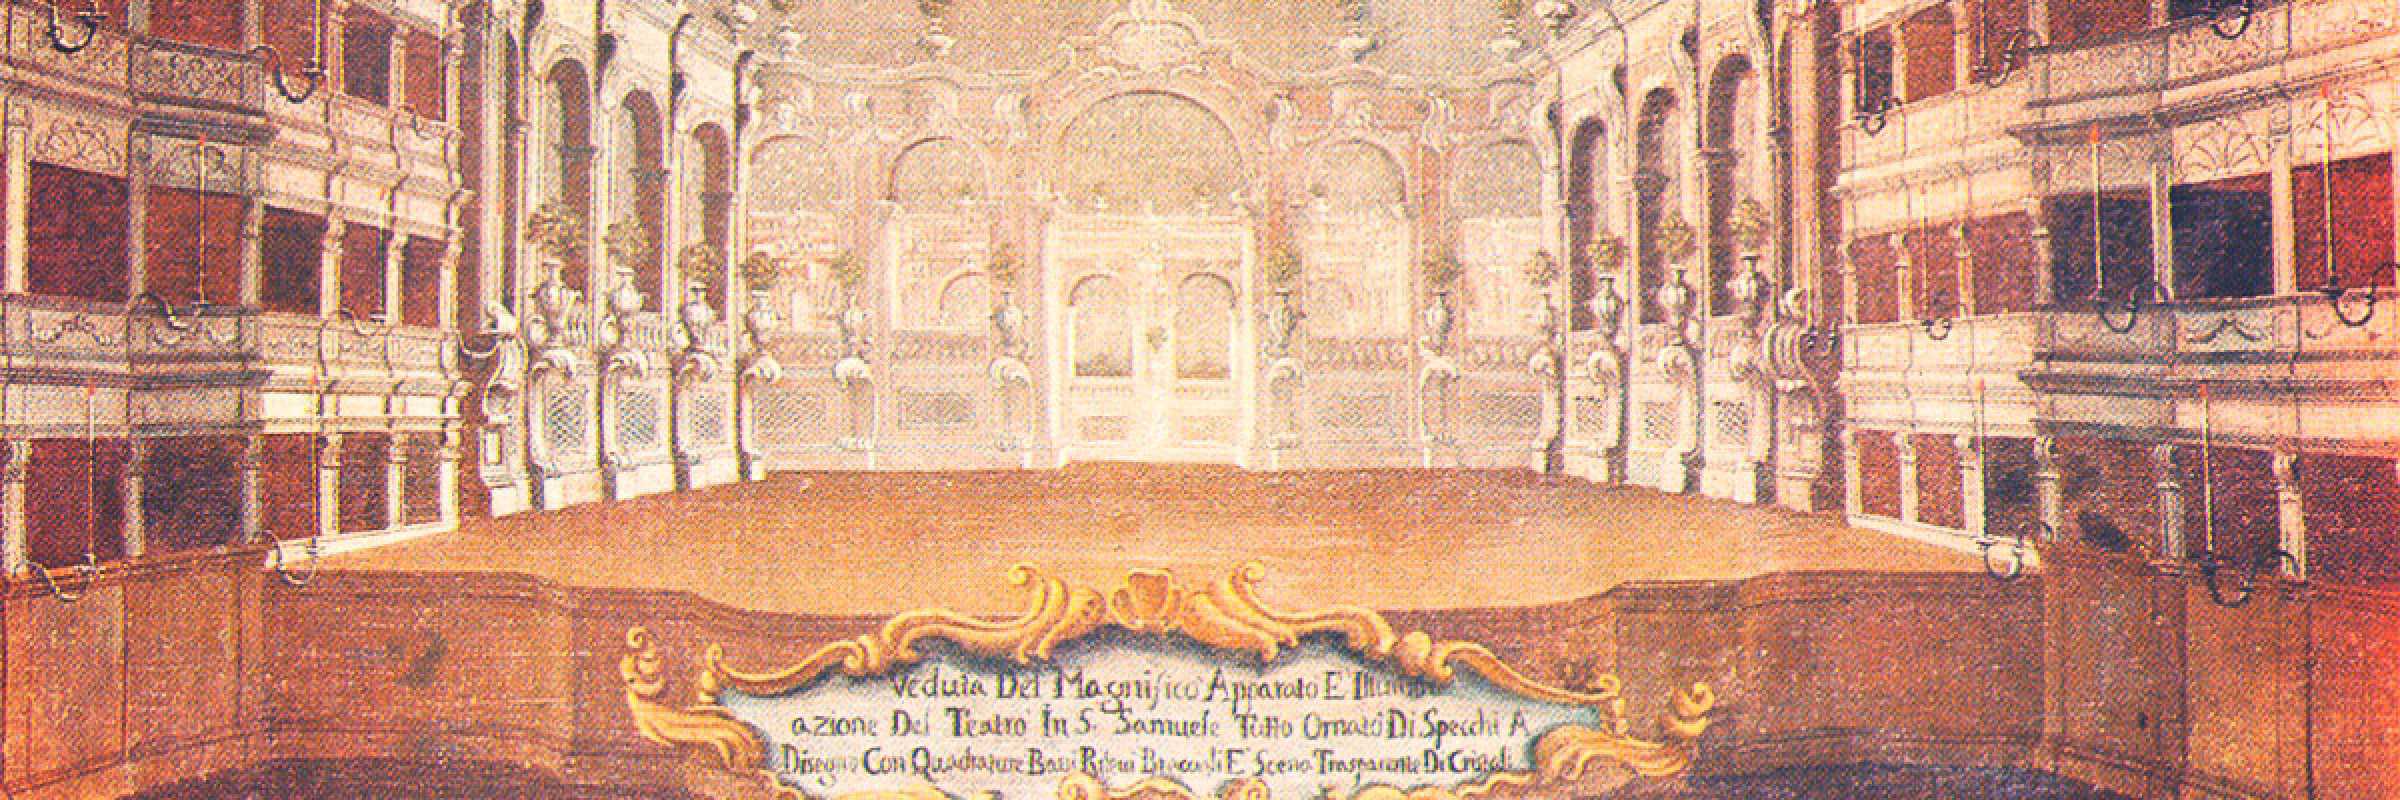 Teatro San Samuele di Venezia, dipinto di Gabriel Bella, XVII secolo